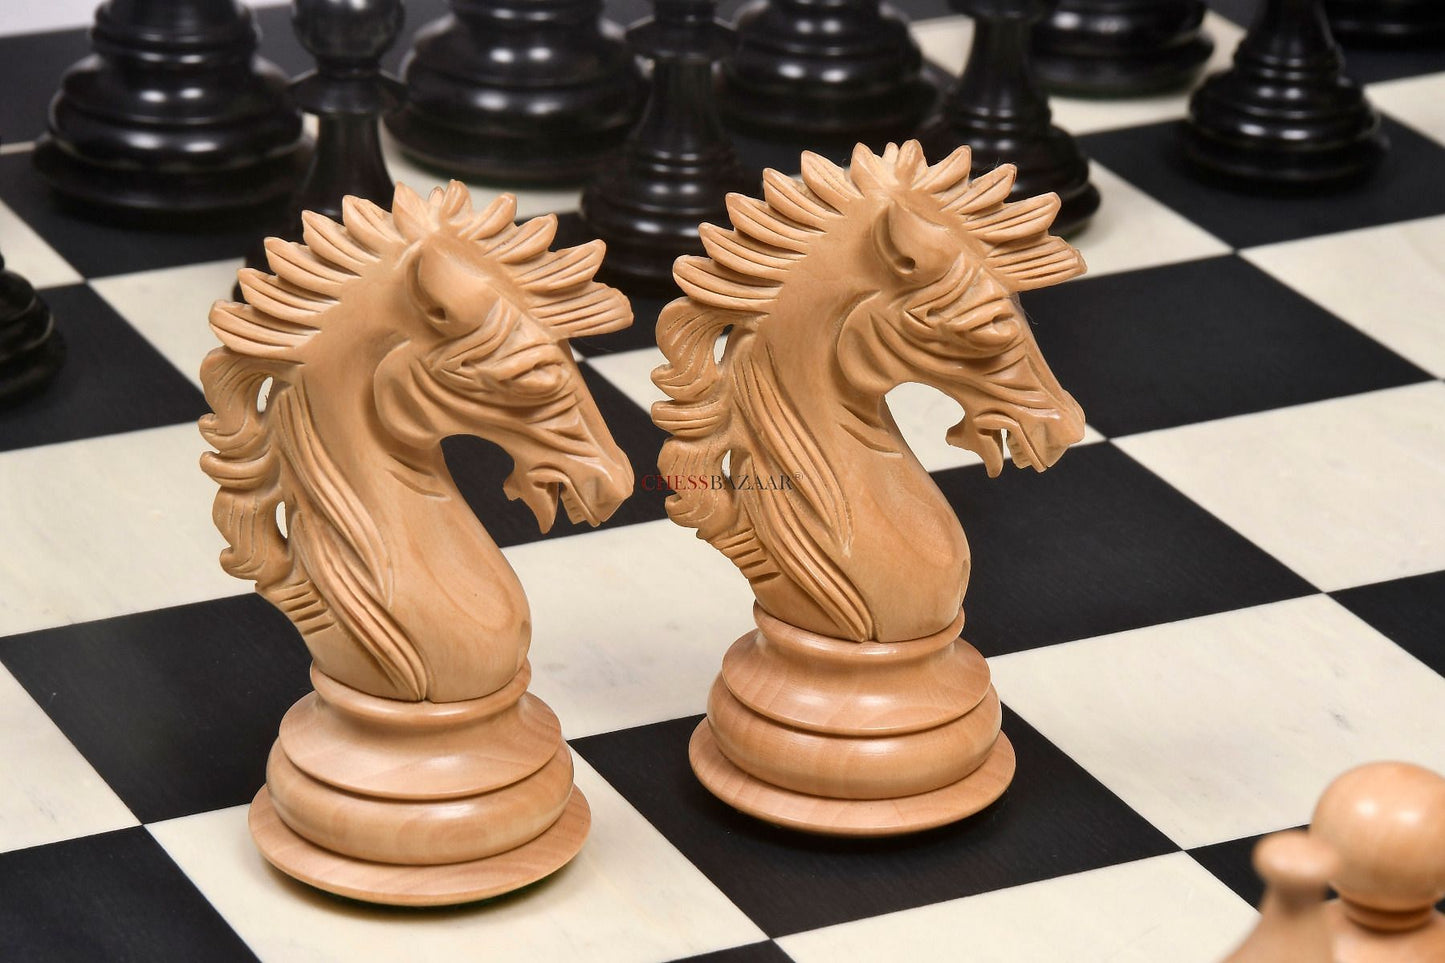 The Ruffian American Series Staunton Chess Pieces in Ebony / Box Wood - 4.8" King